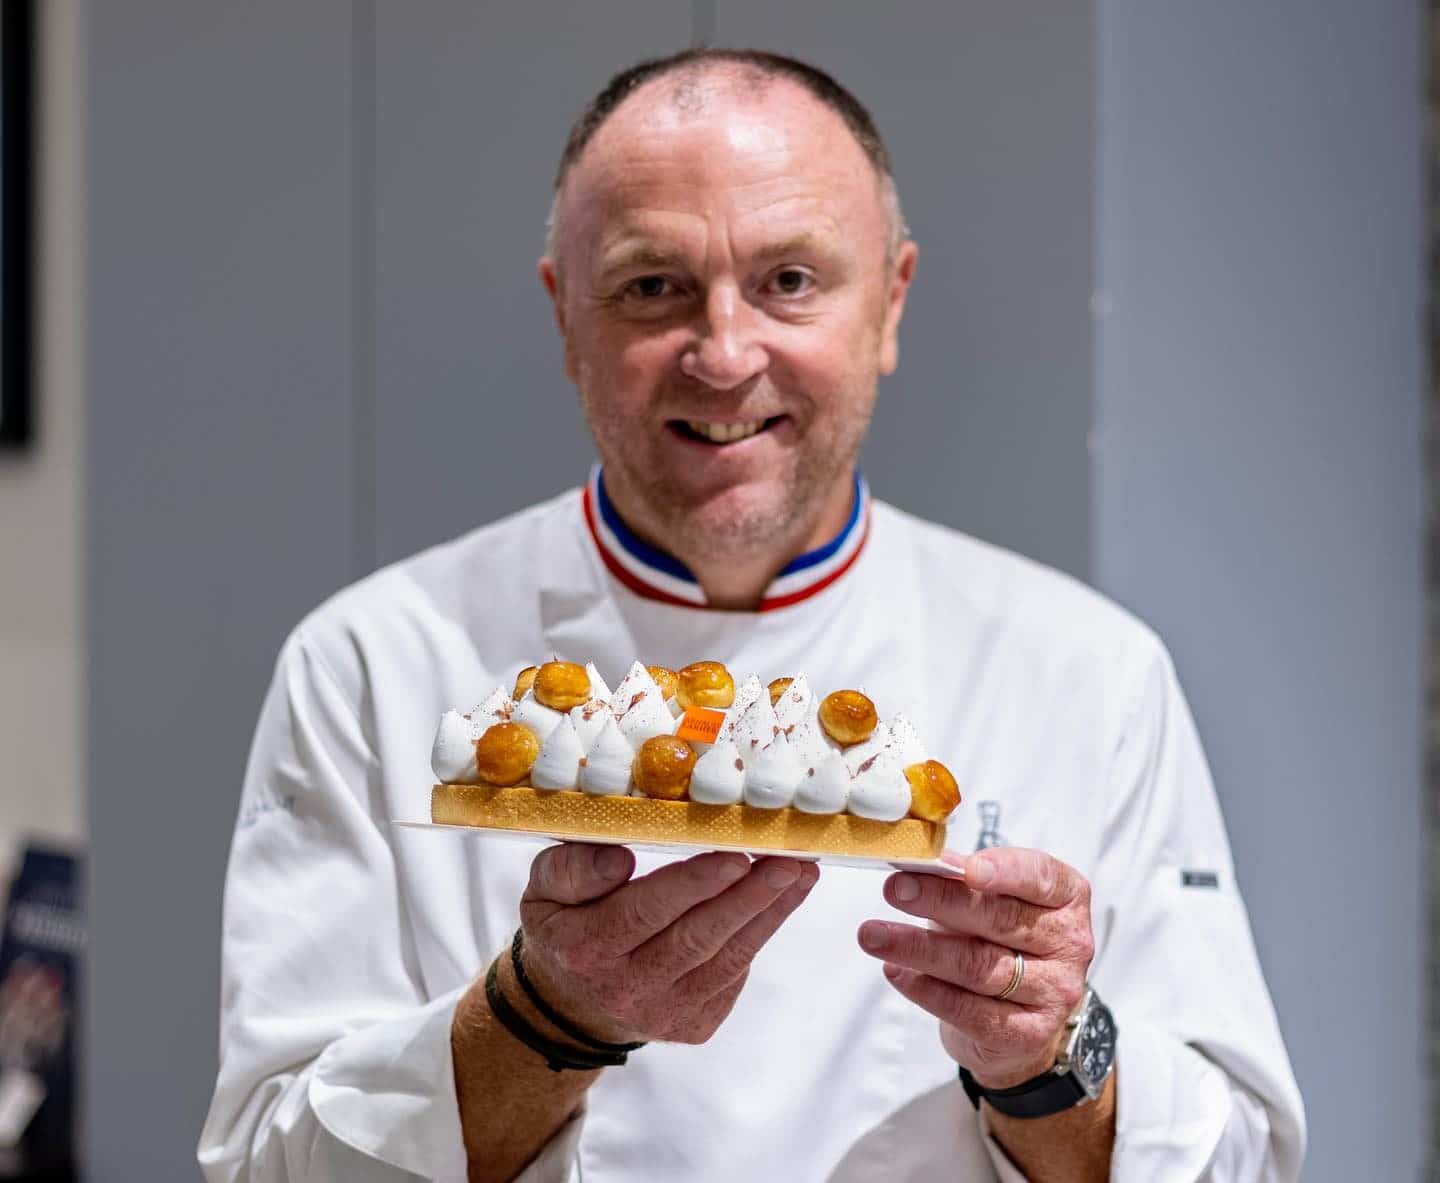 Arnaud Larher : Les vergers Boiron pastry chef